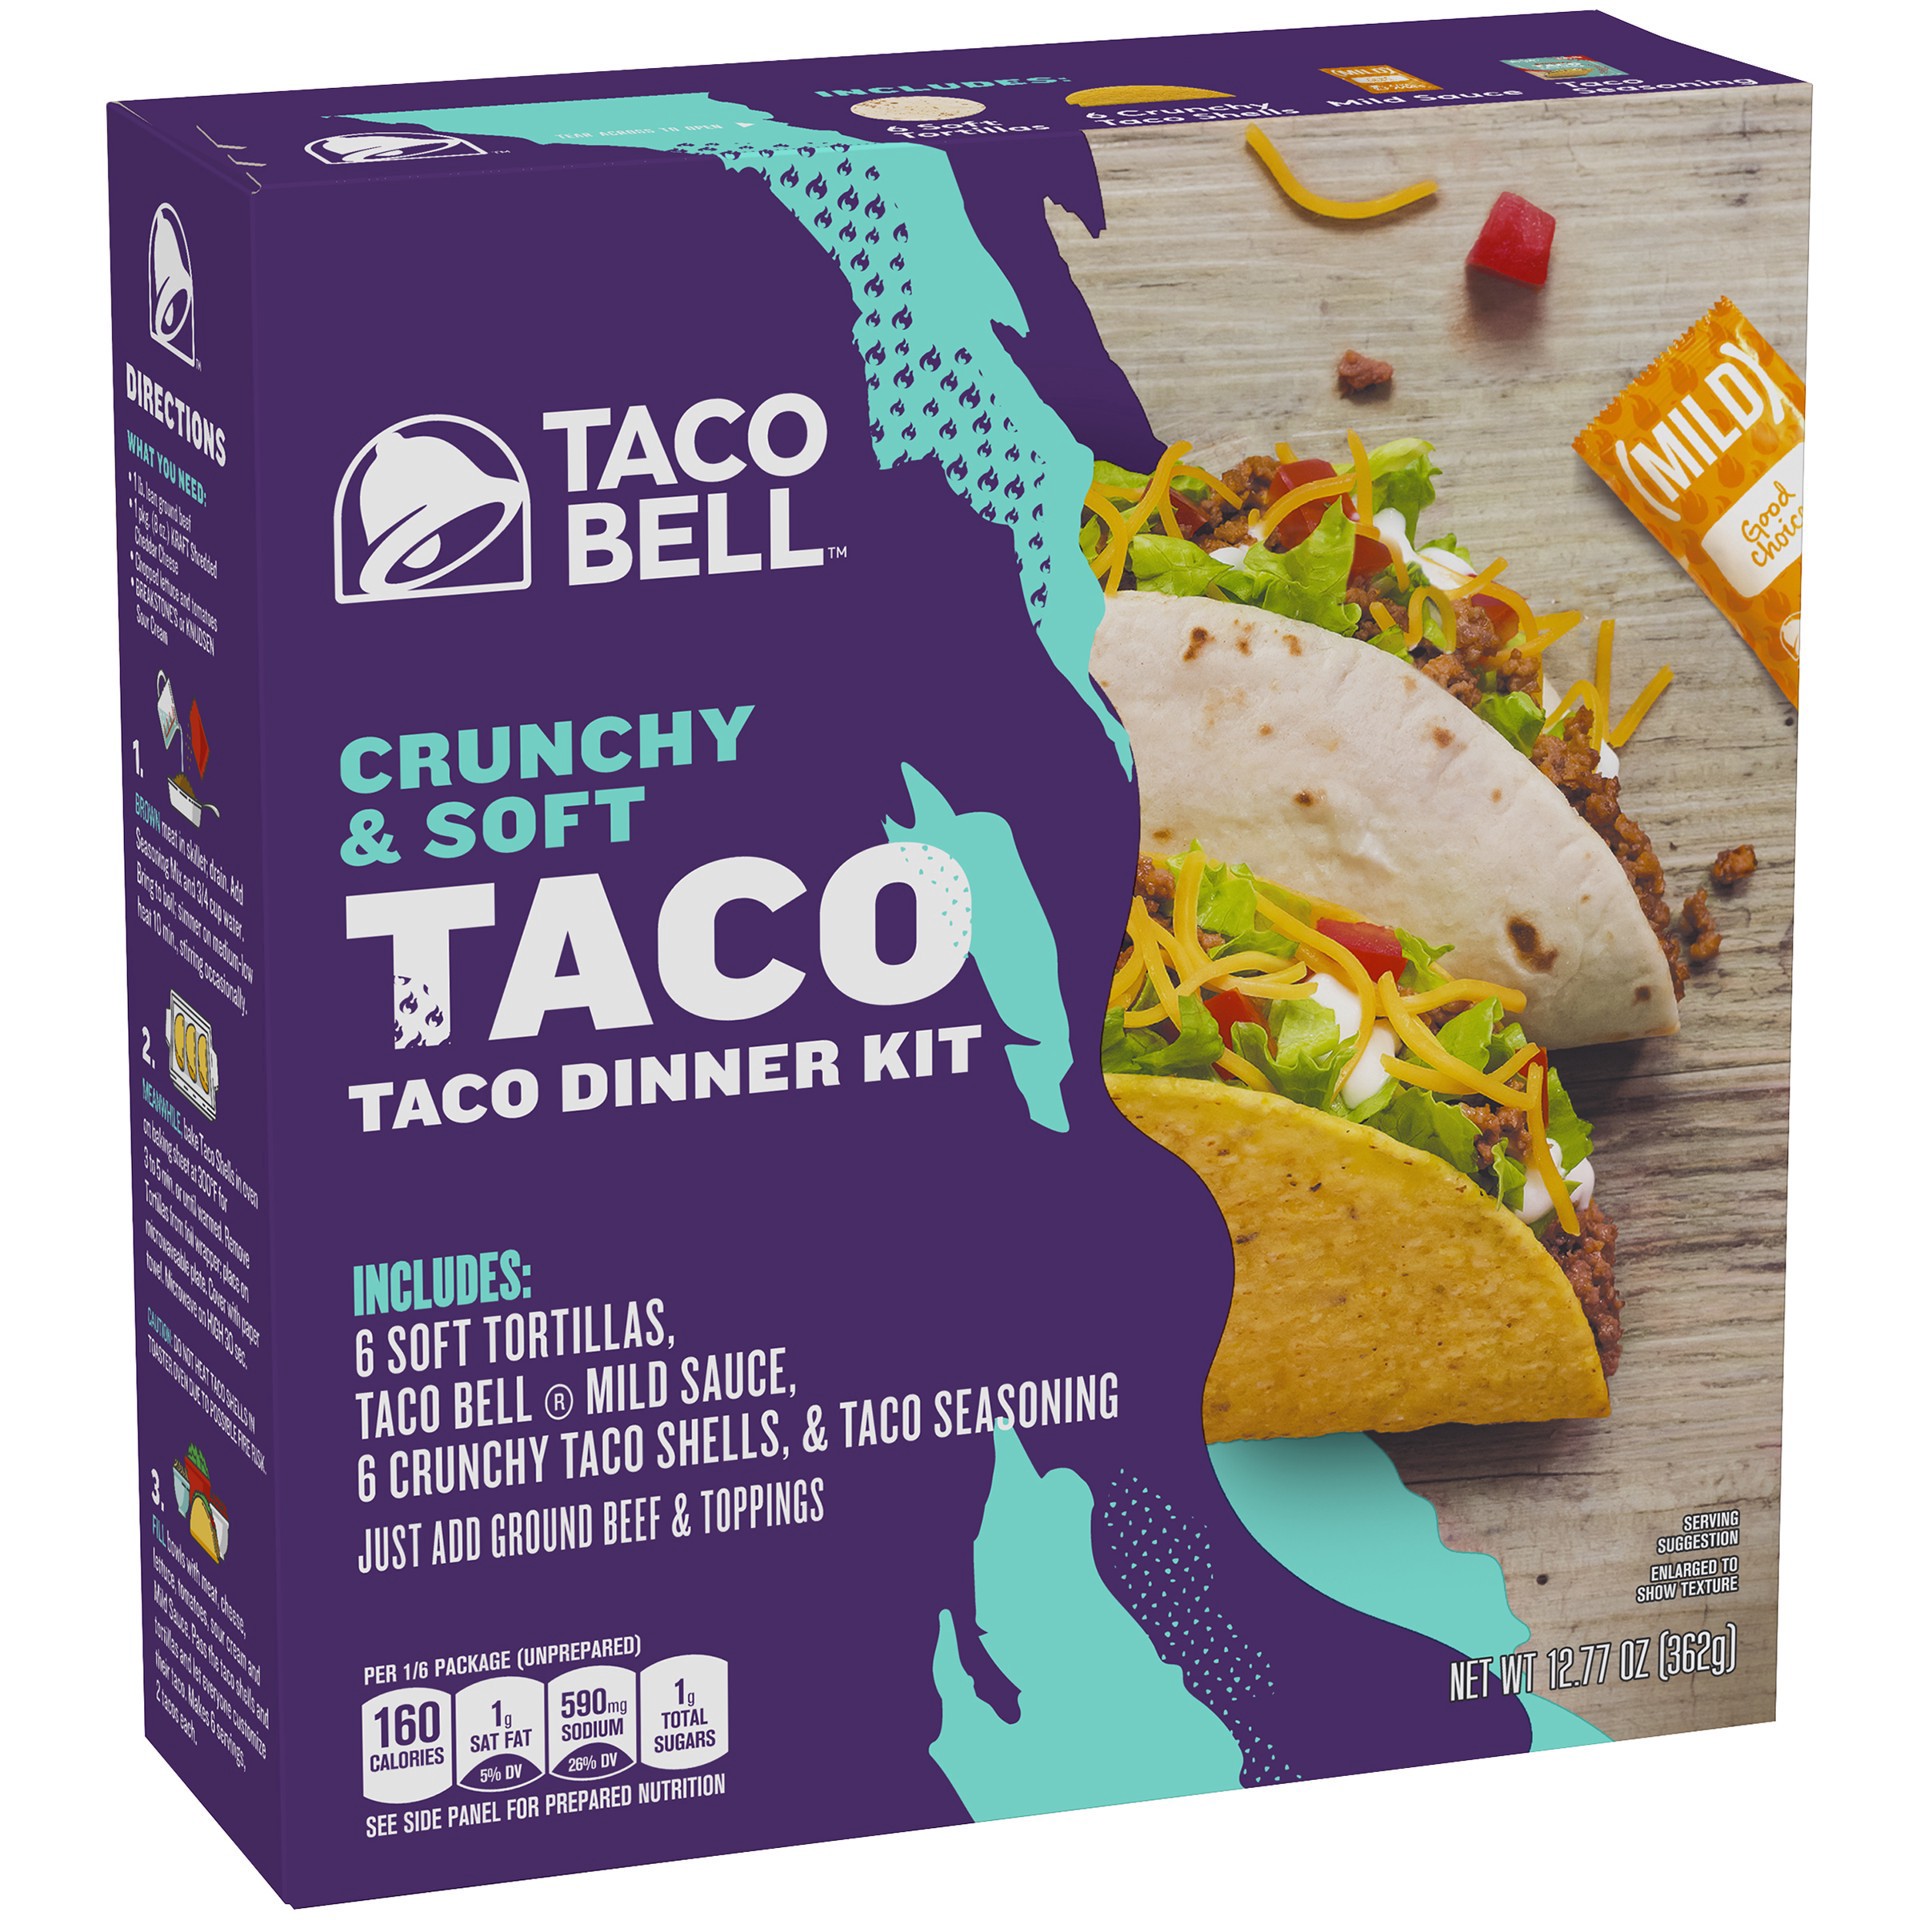 slide 66 of 101, Taco Bell Crunchy & Soft Taco Cravings Kit with 6 Soft Tortillas, 6 Crunchy Taco Shells, Taco Bell Mild Sauce & Seasoning, 12.77 oz Box, 1 ct